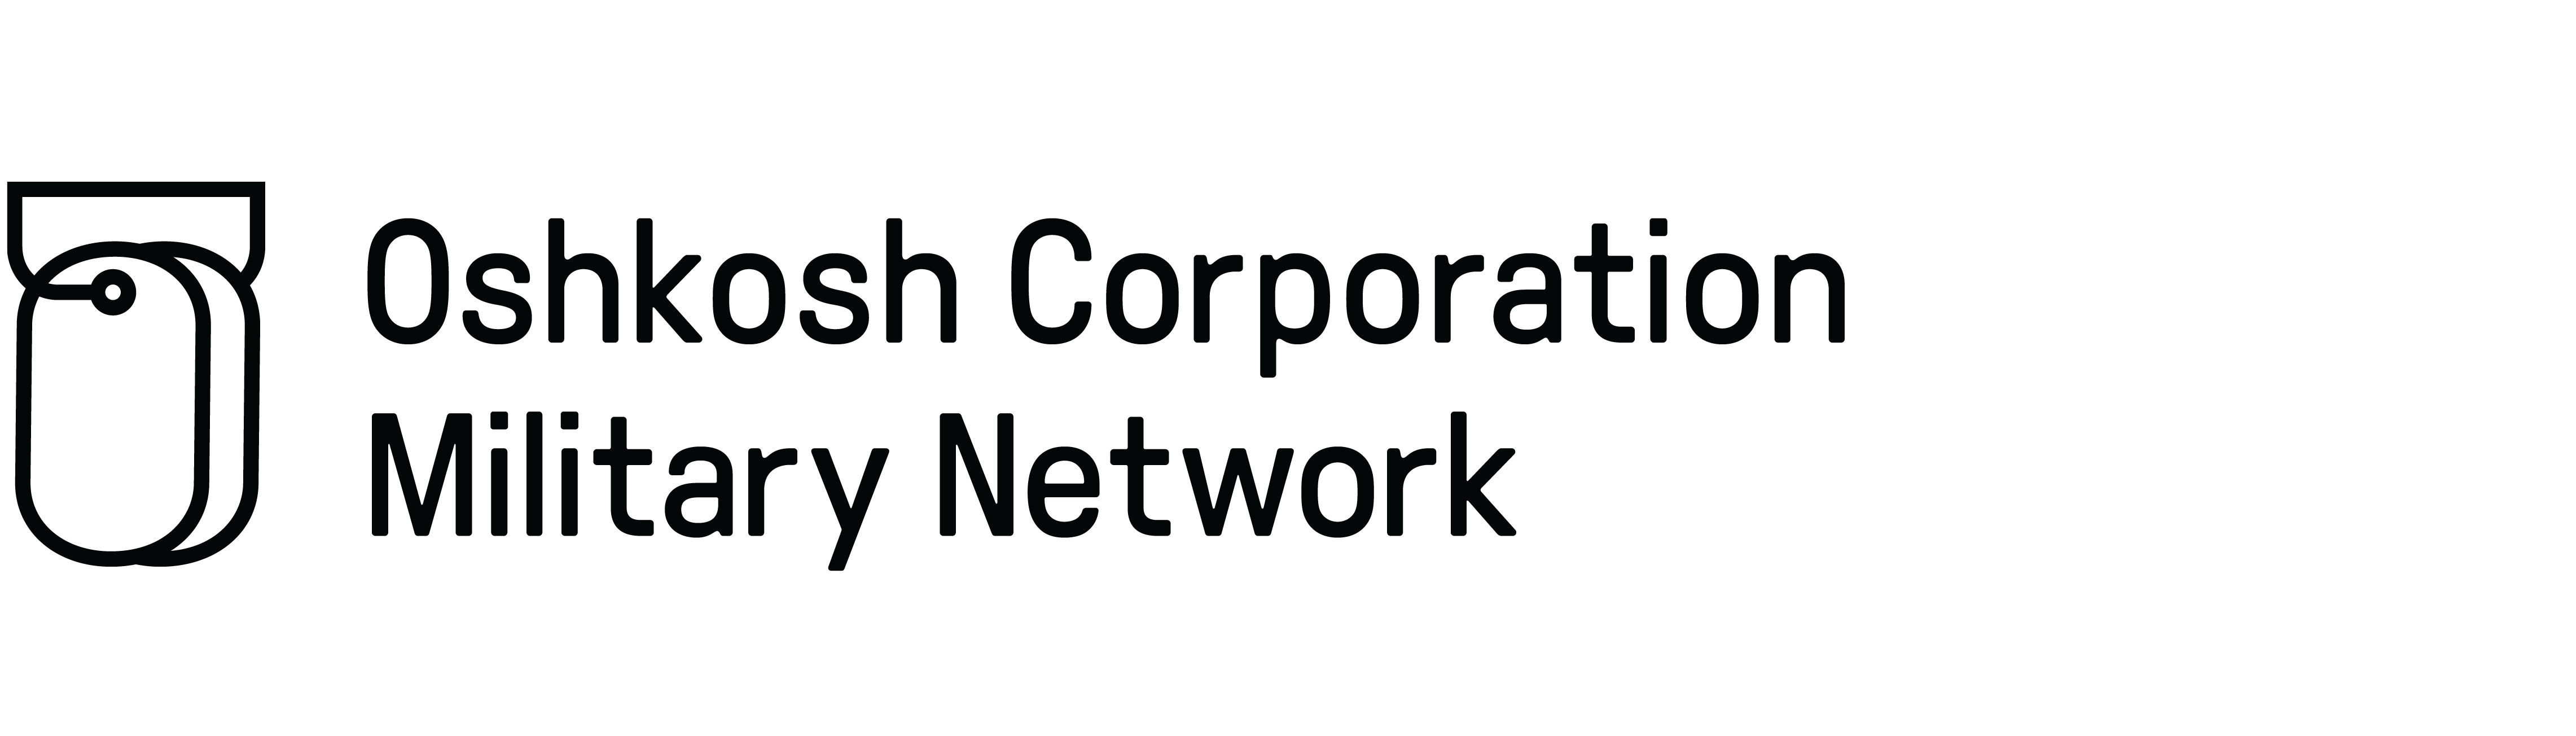 Black Oshkosh Corporation Military Network logo